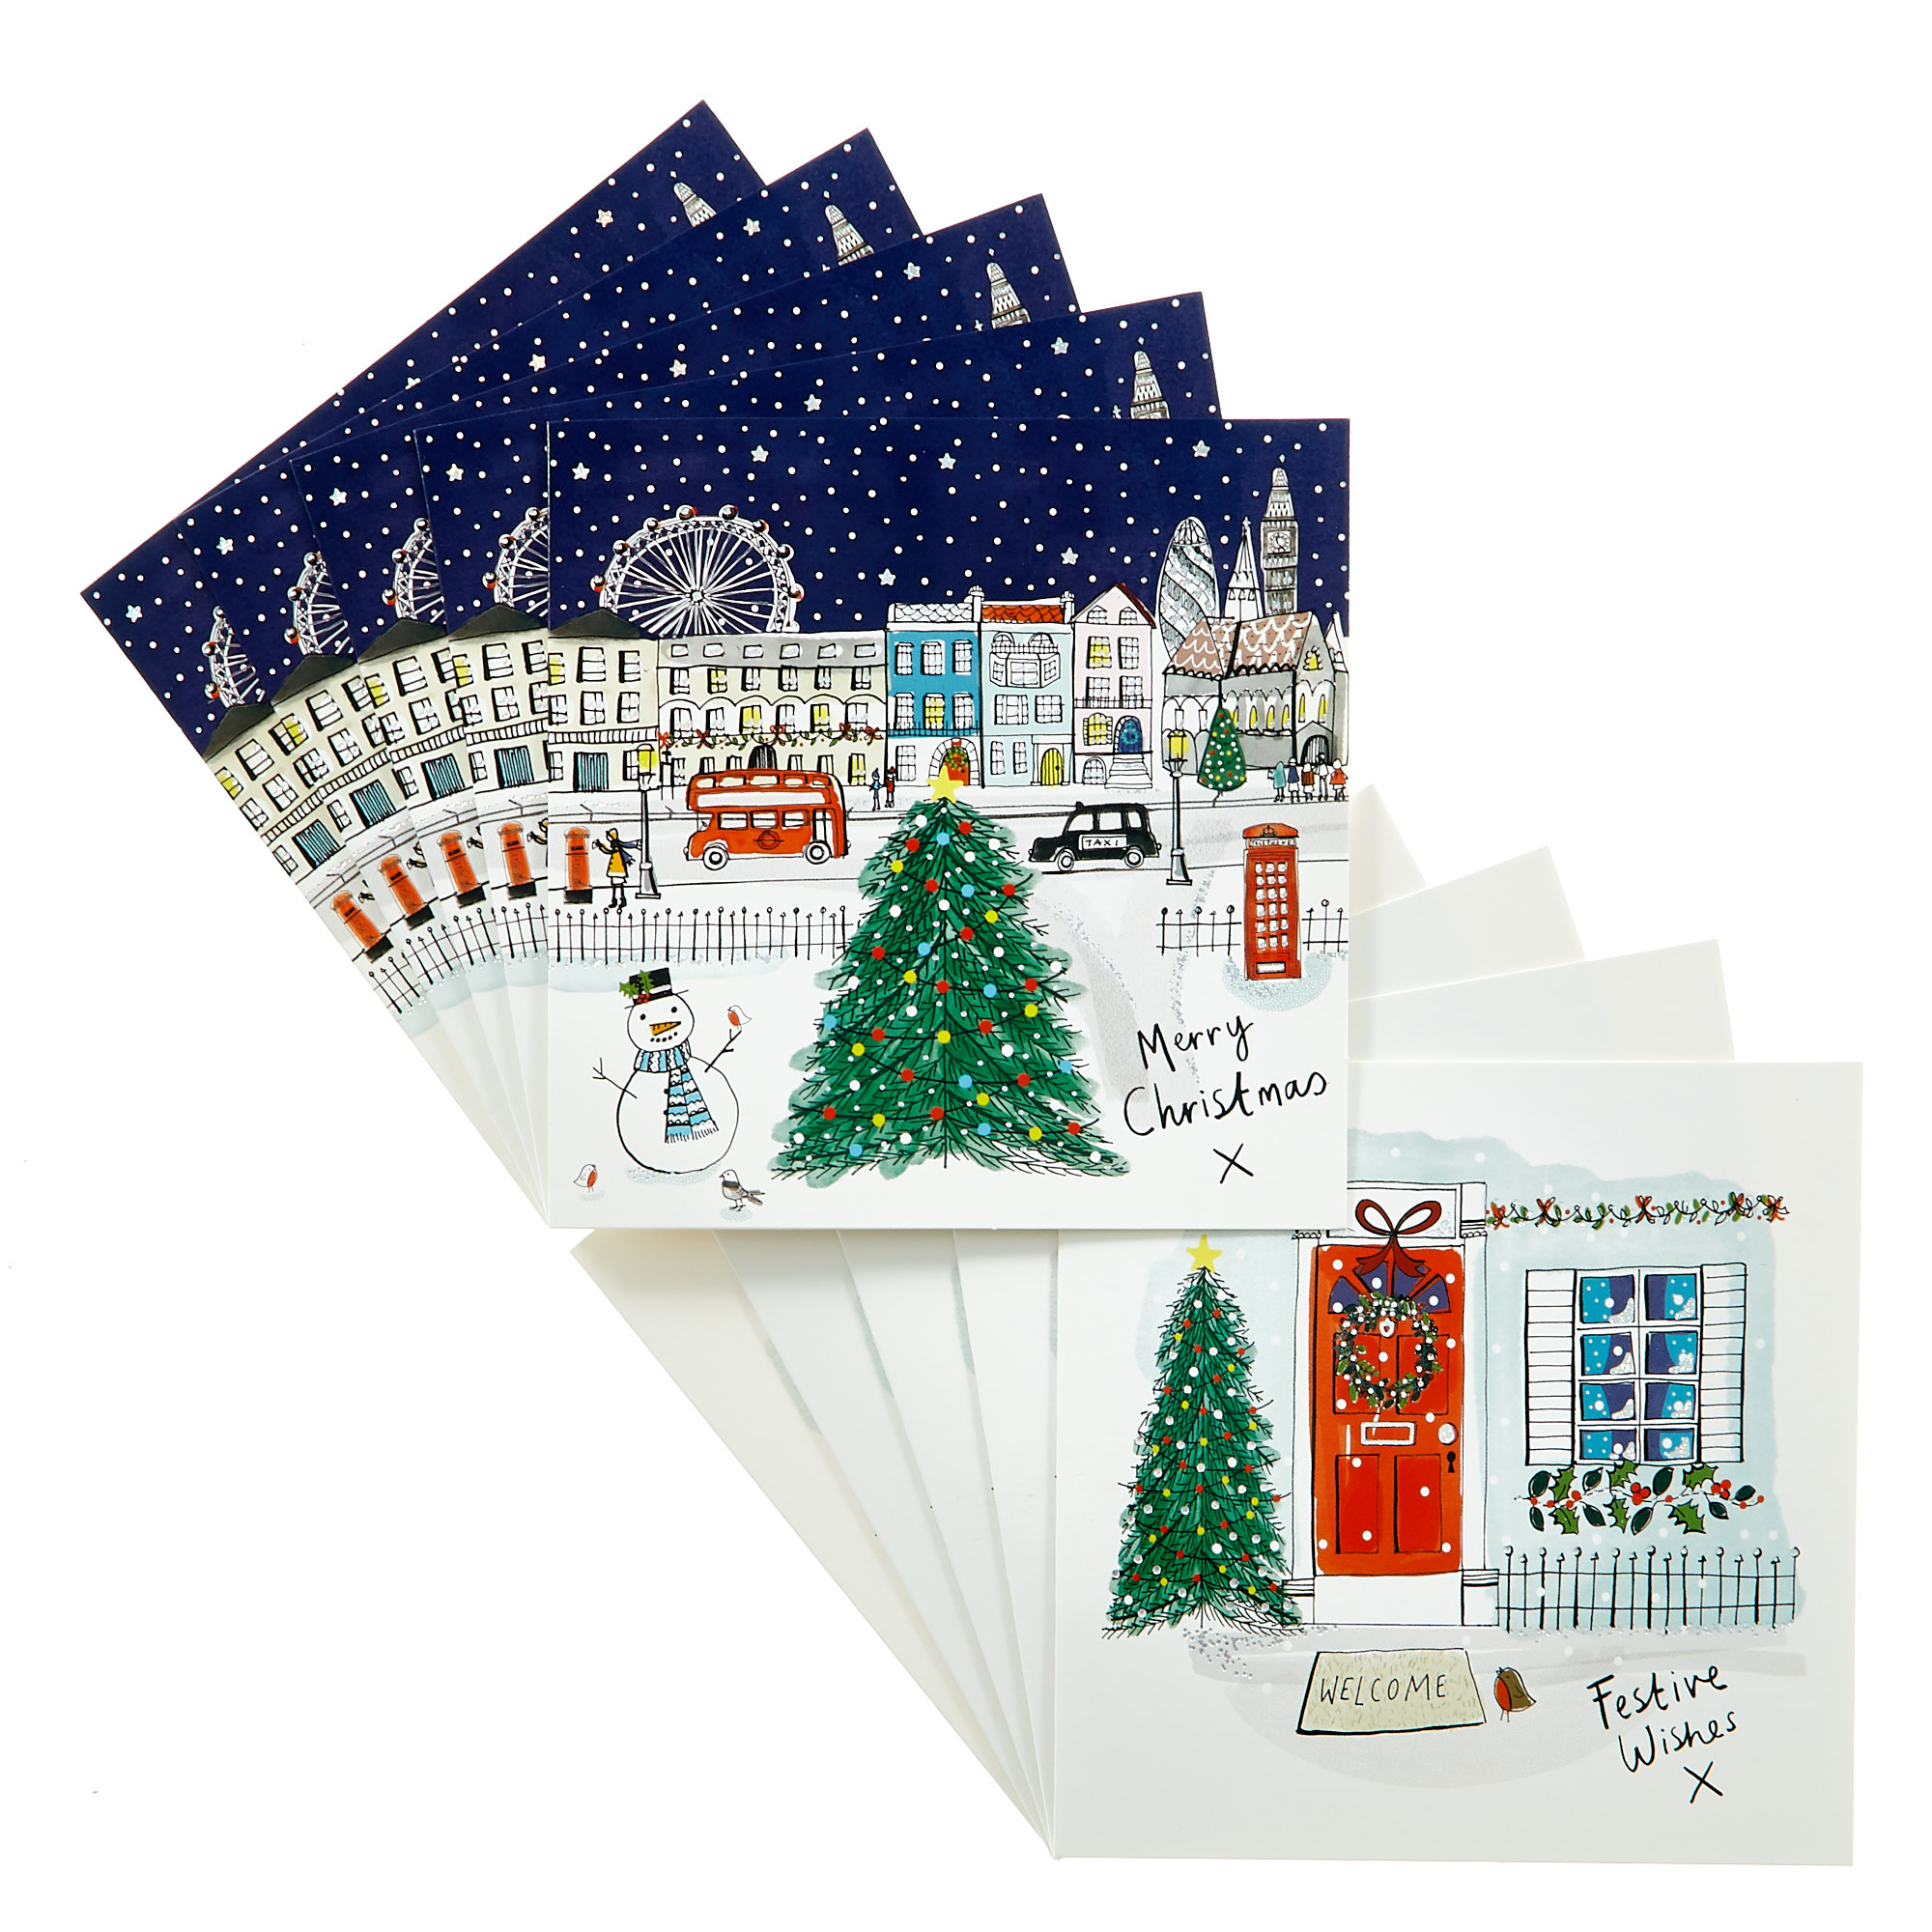 18 Festive Scene Charity Christmas Cards - 2 Designs 